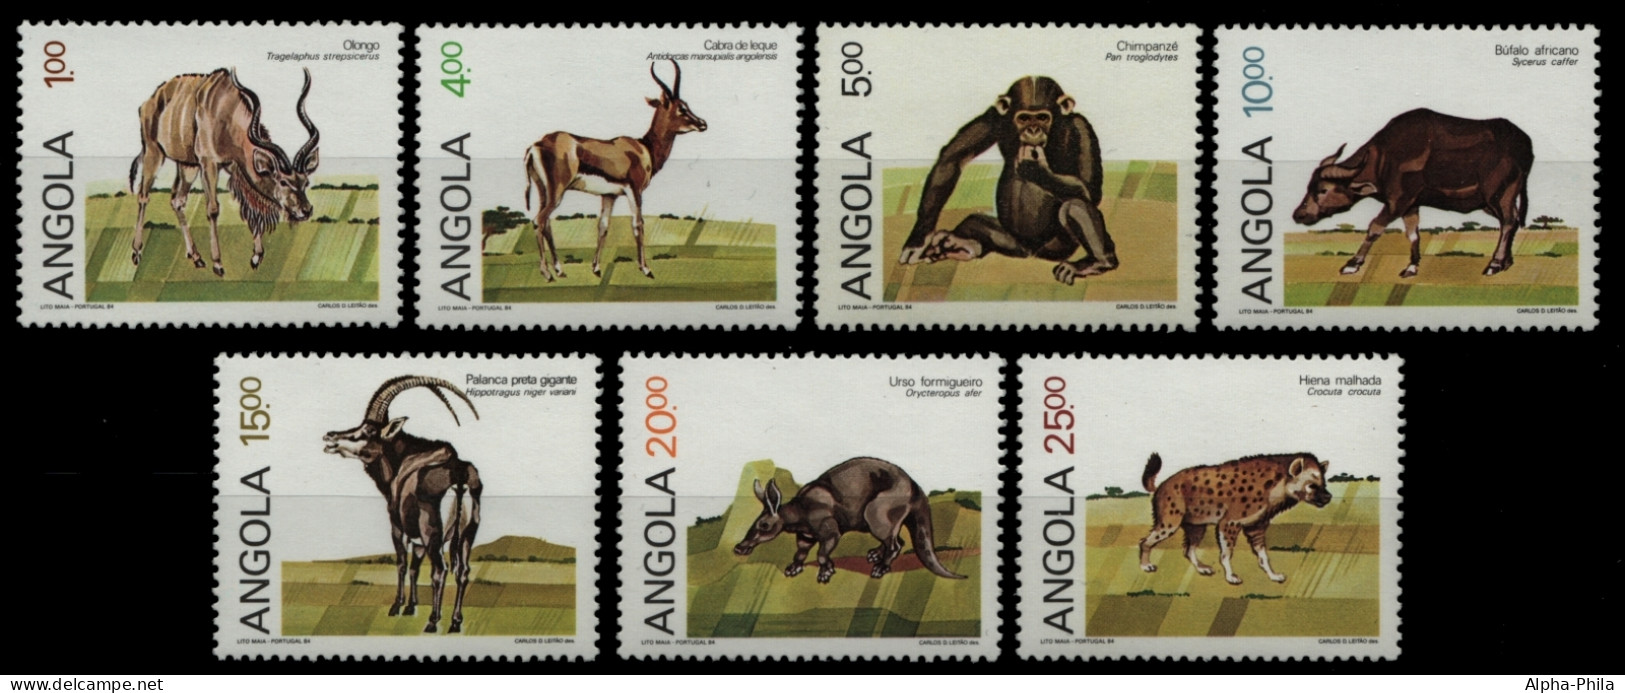 Angola 1984 - Mi-Nr. 707-713 ** - MNH - Wildtiere / Wild Animals - Angola